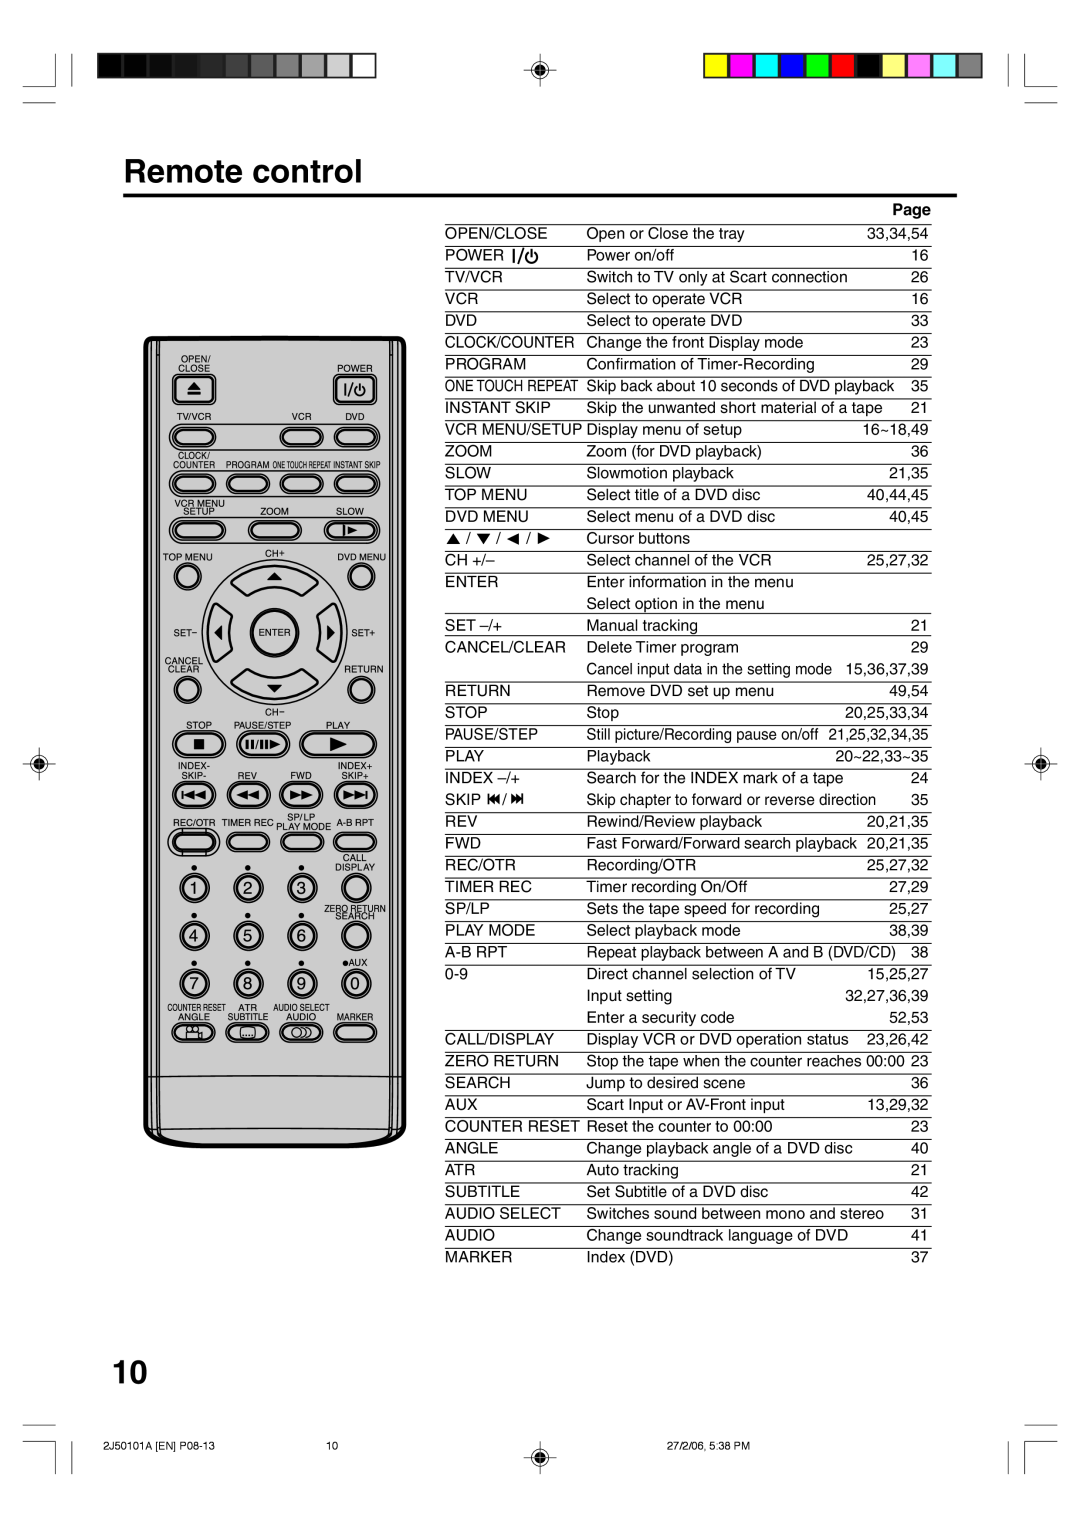 Toshiba SD-37VBSB manual Remote control, Page 